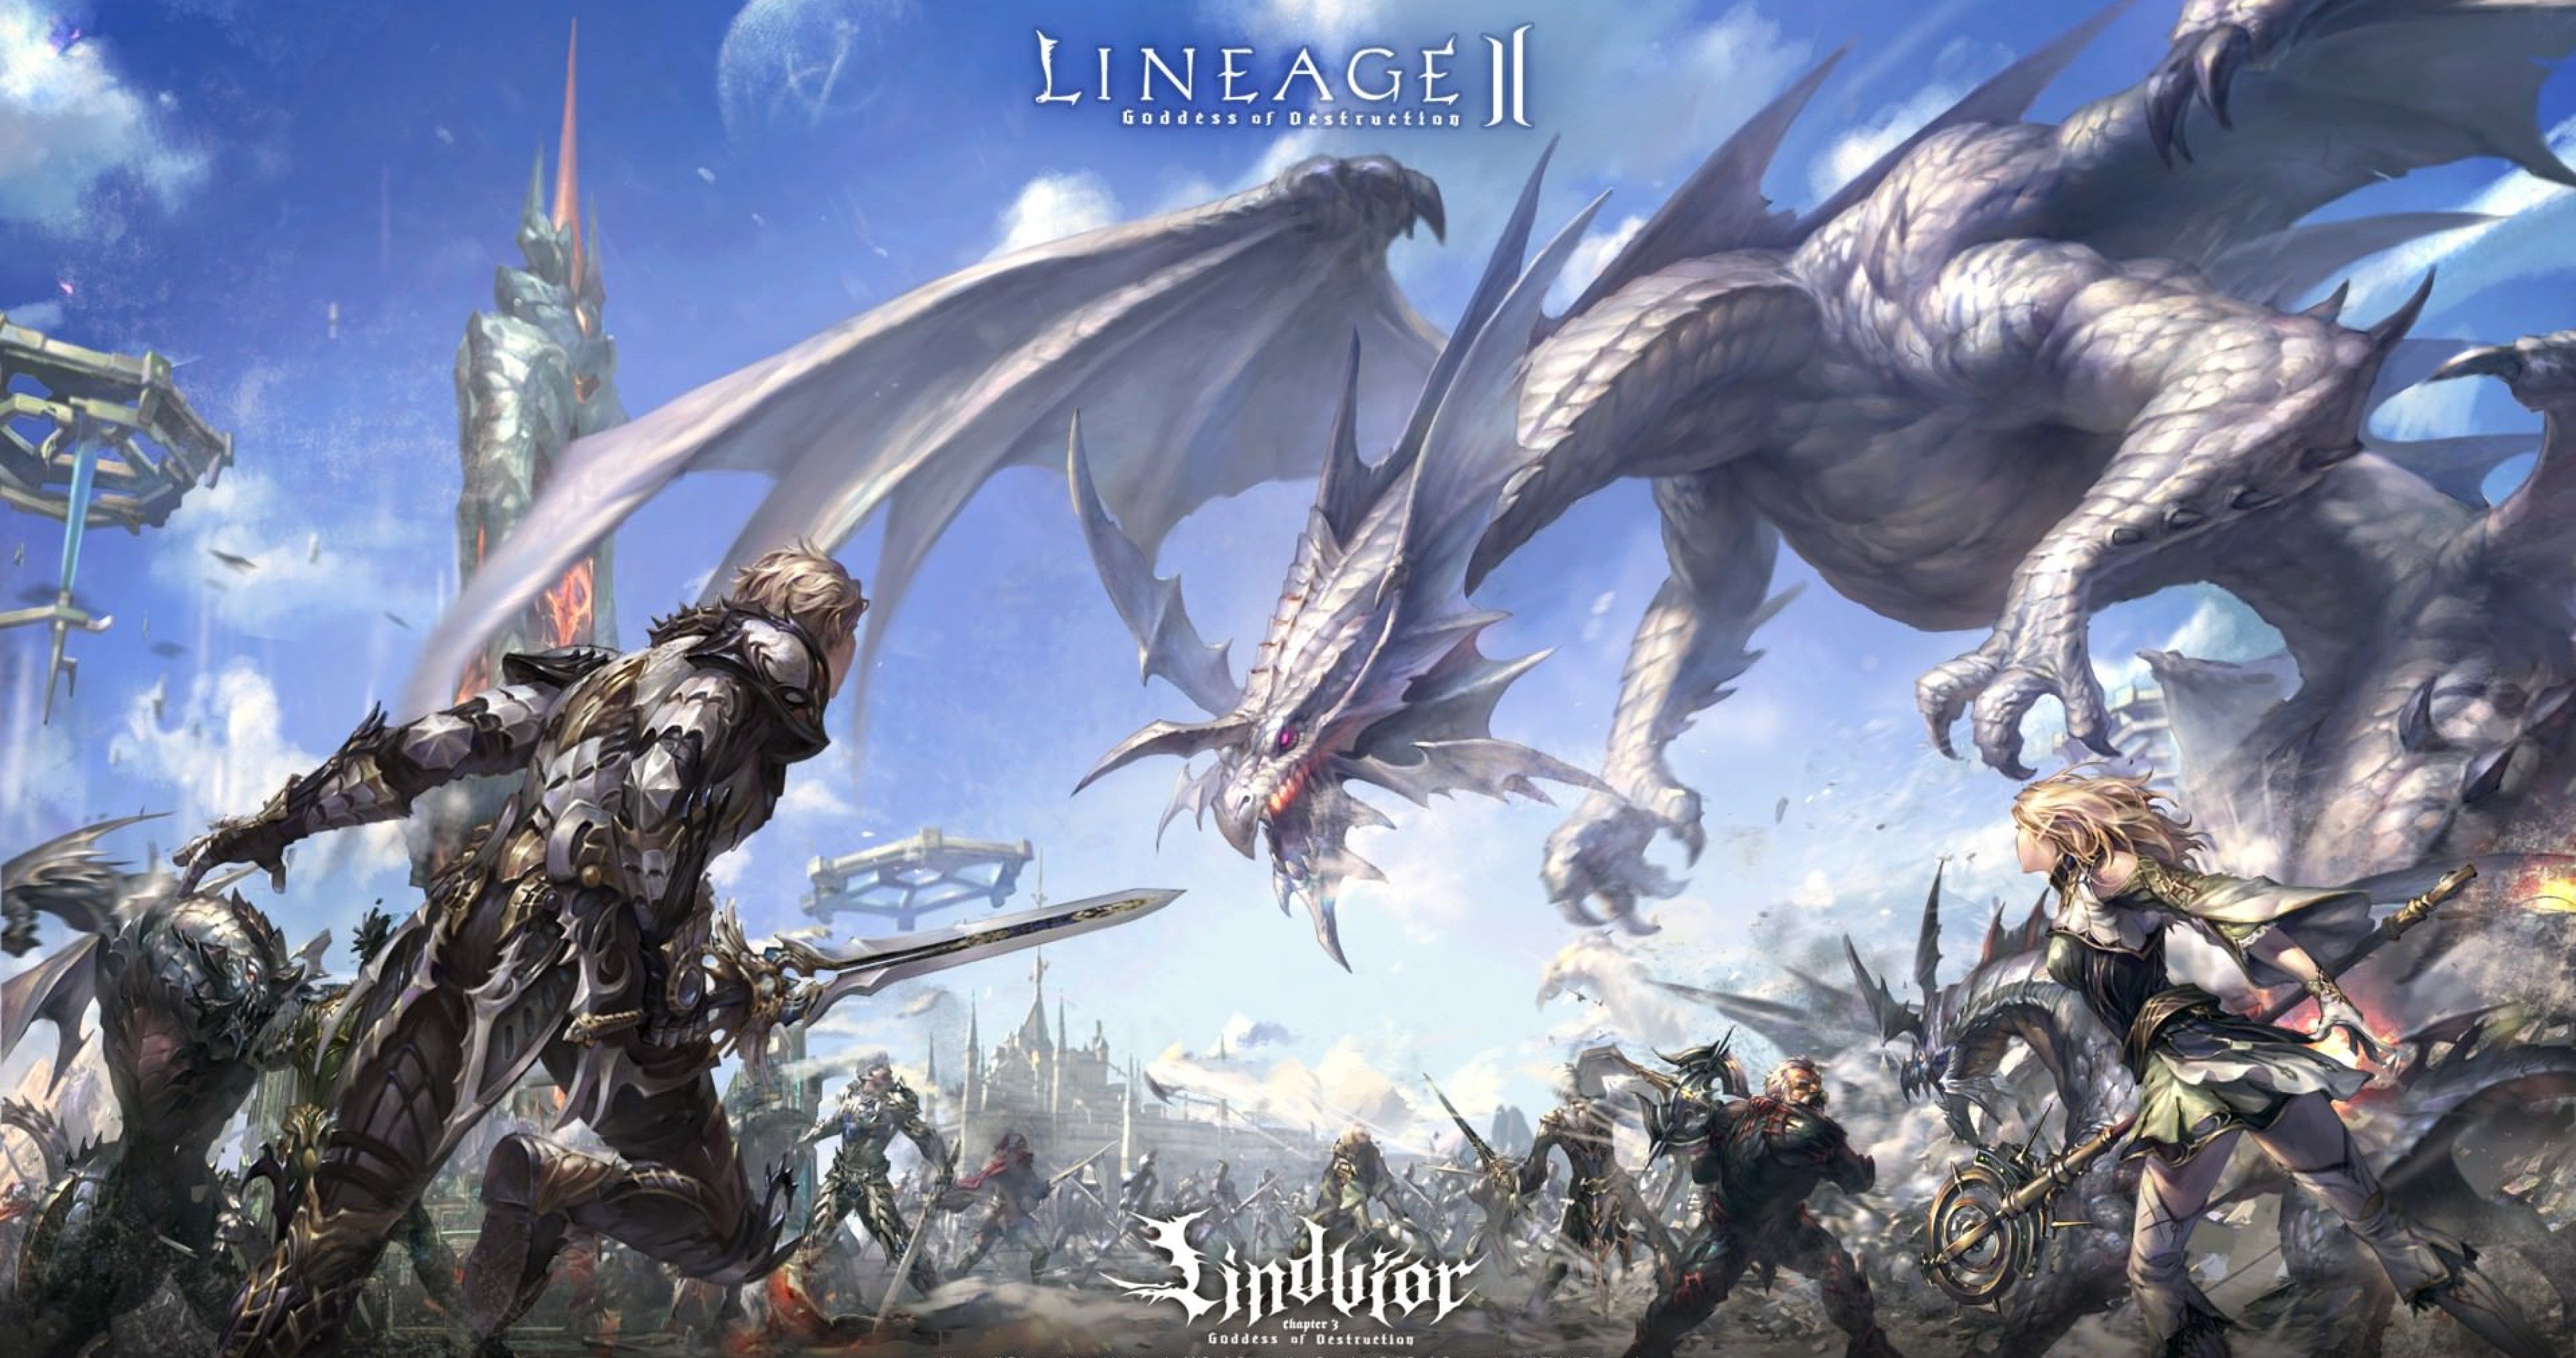 lineage 2 game 4k ultra HD wallpaper. Warriors wallpaper, Goddess of destruction, High fantasy